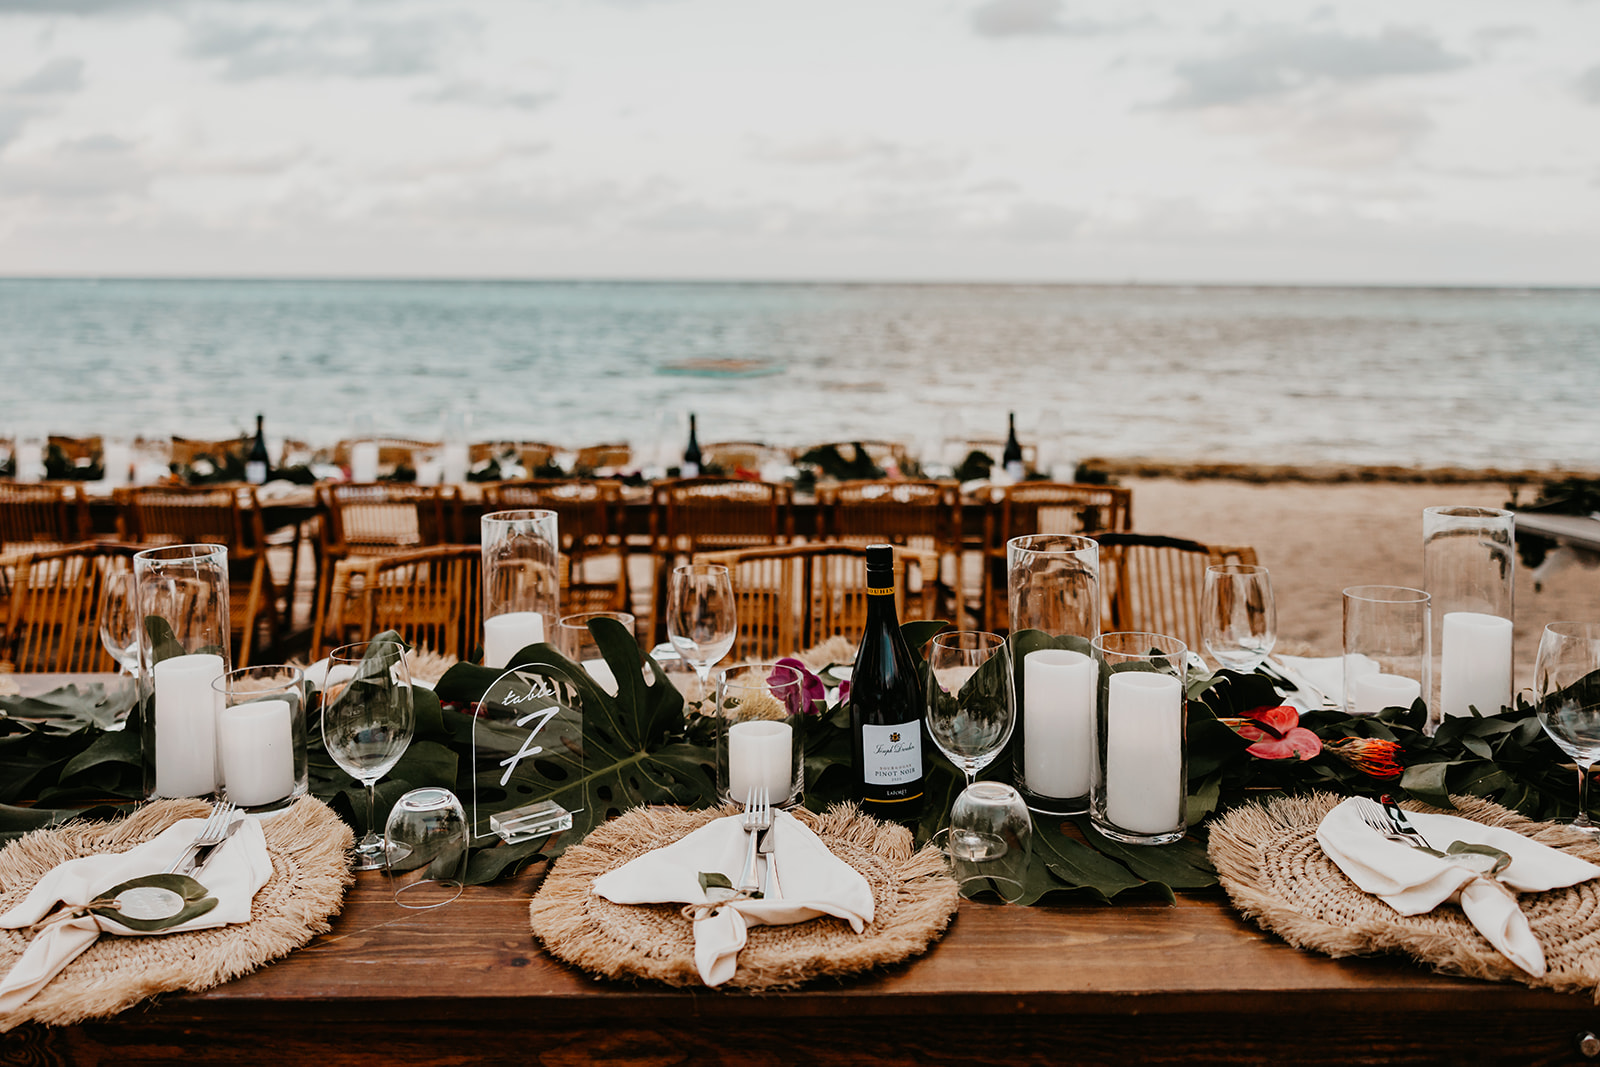 Intimate candlelit dinner reception, offering breathtaking views of the British Virgin Islands coastline